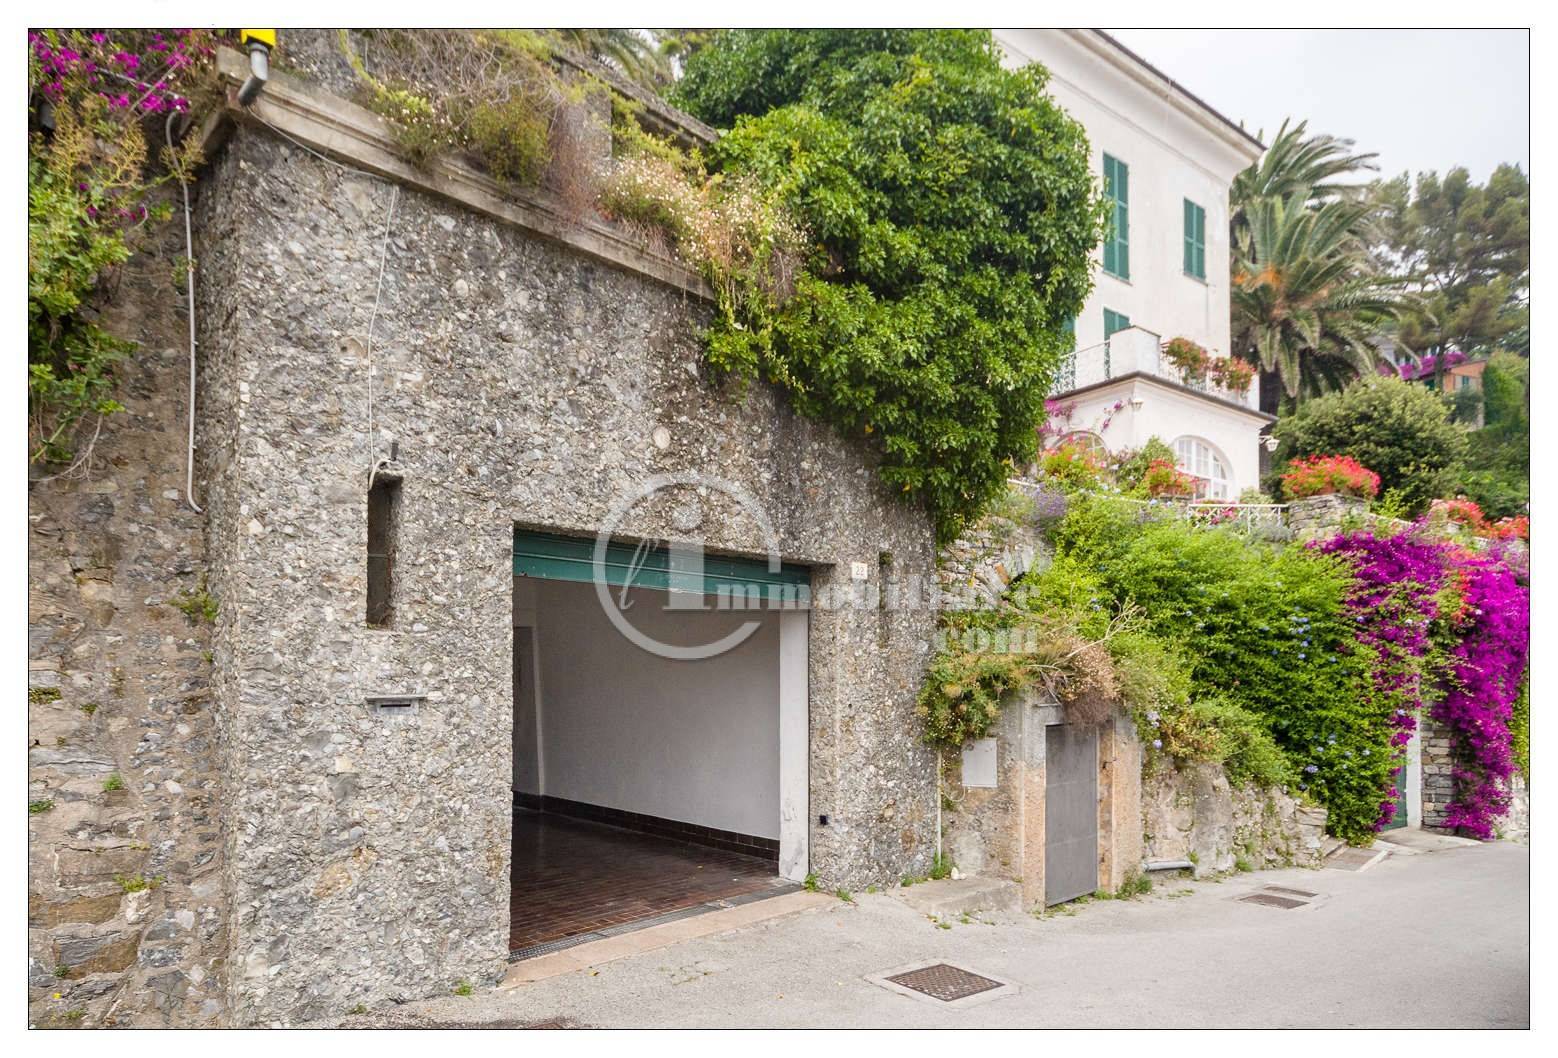 Villa in Vendita a Santa Margherita Ligure: 5 locali, 600 mq - Foto 13